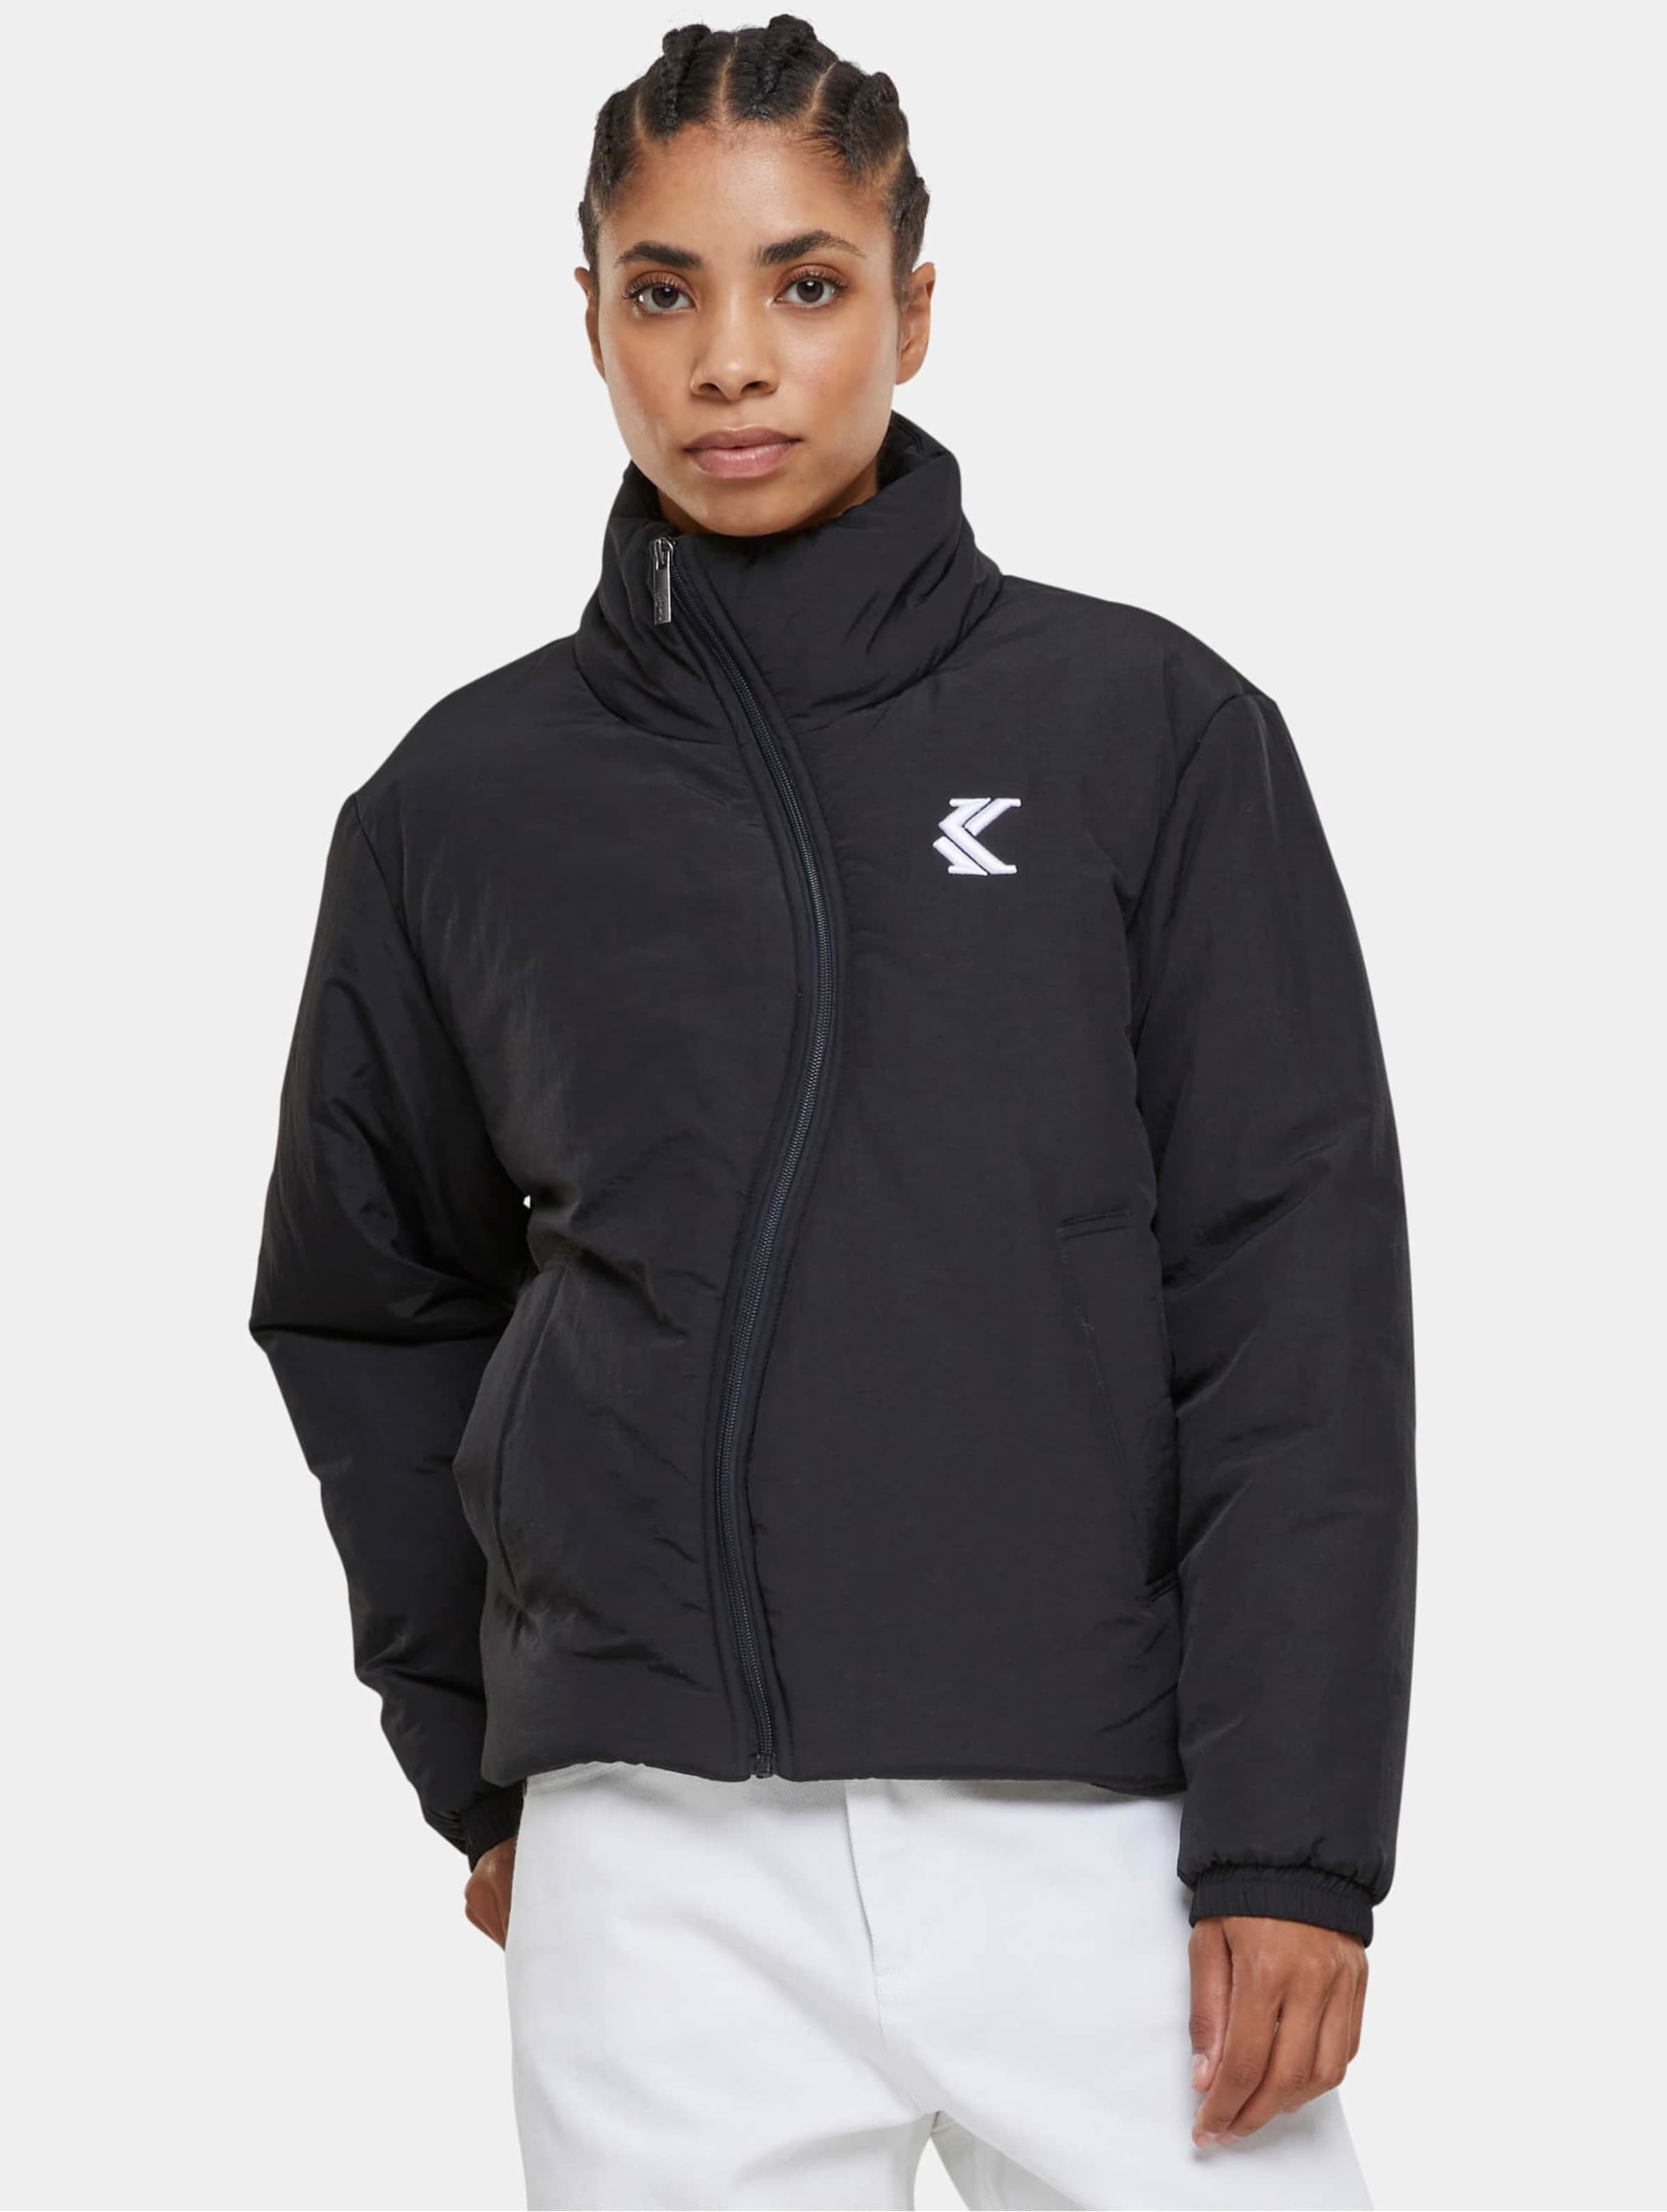 Karl Kani KW233-051-3 KK OG Wavy Puffer Jacket Vrouwen op kleur zwart, Maat S